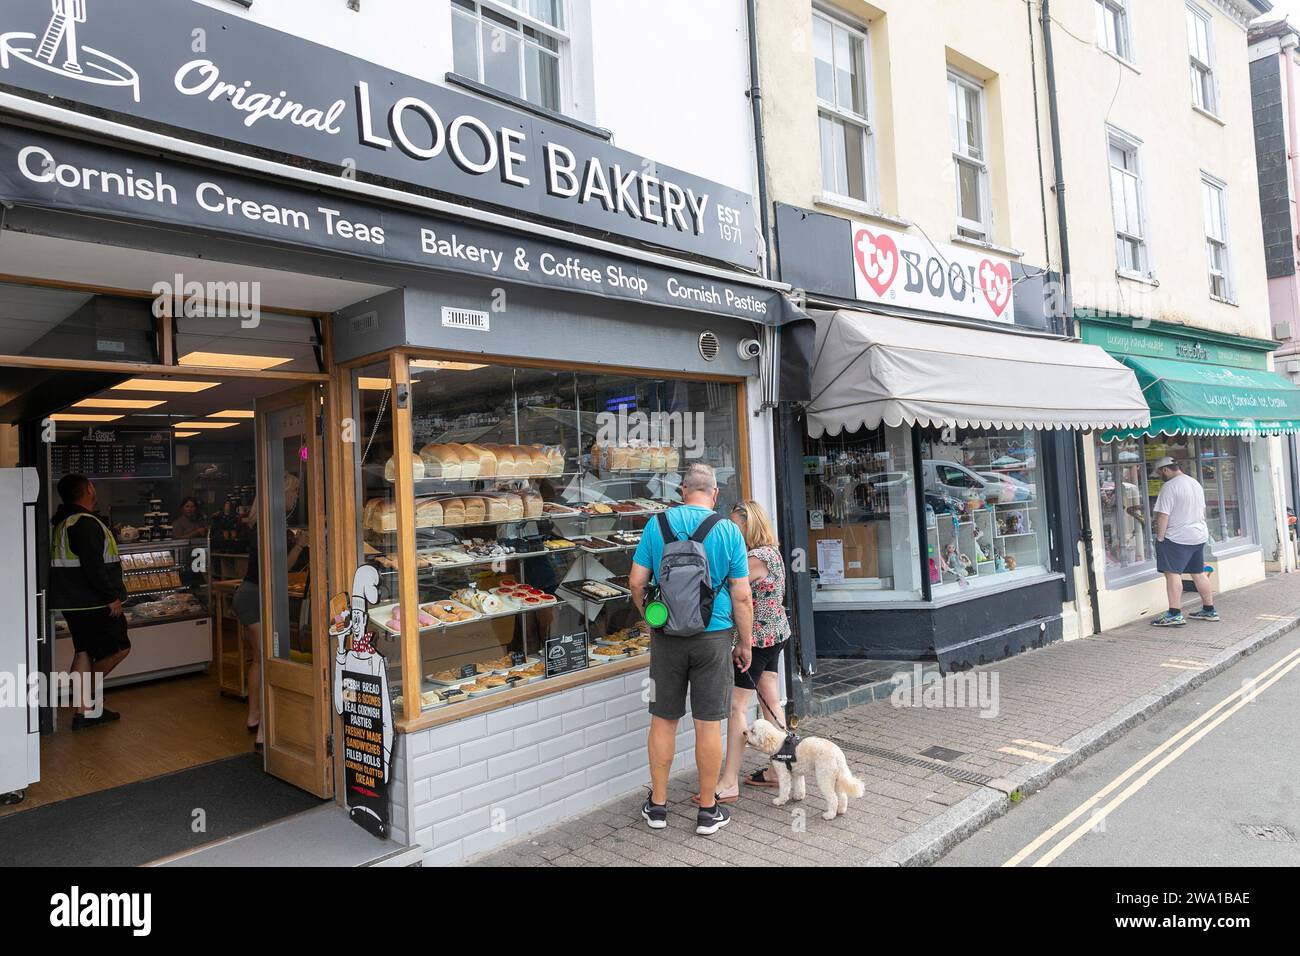 Original Looe bakery in this Cornish town offering cream teas, Cornish pasties and coffee, Cornwall, England,UK,2023 Stock Photo